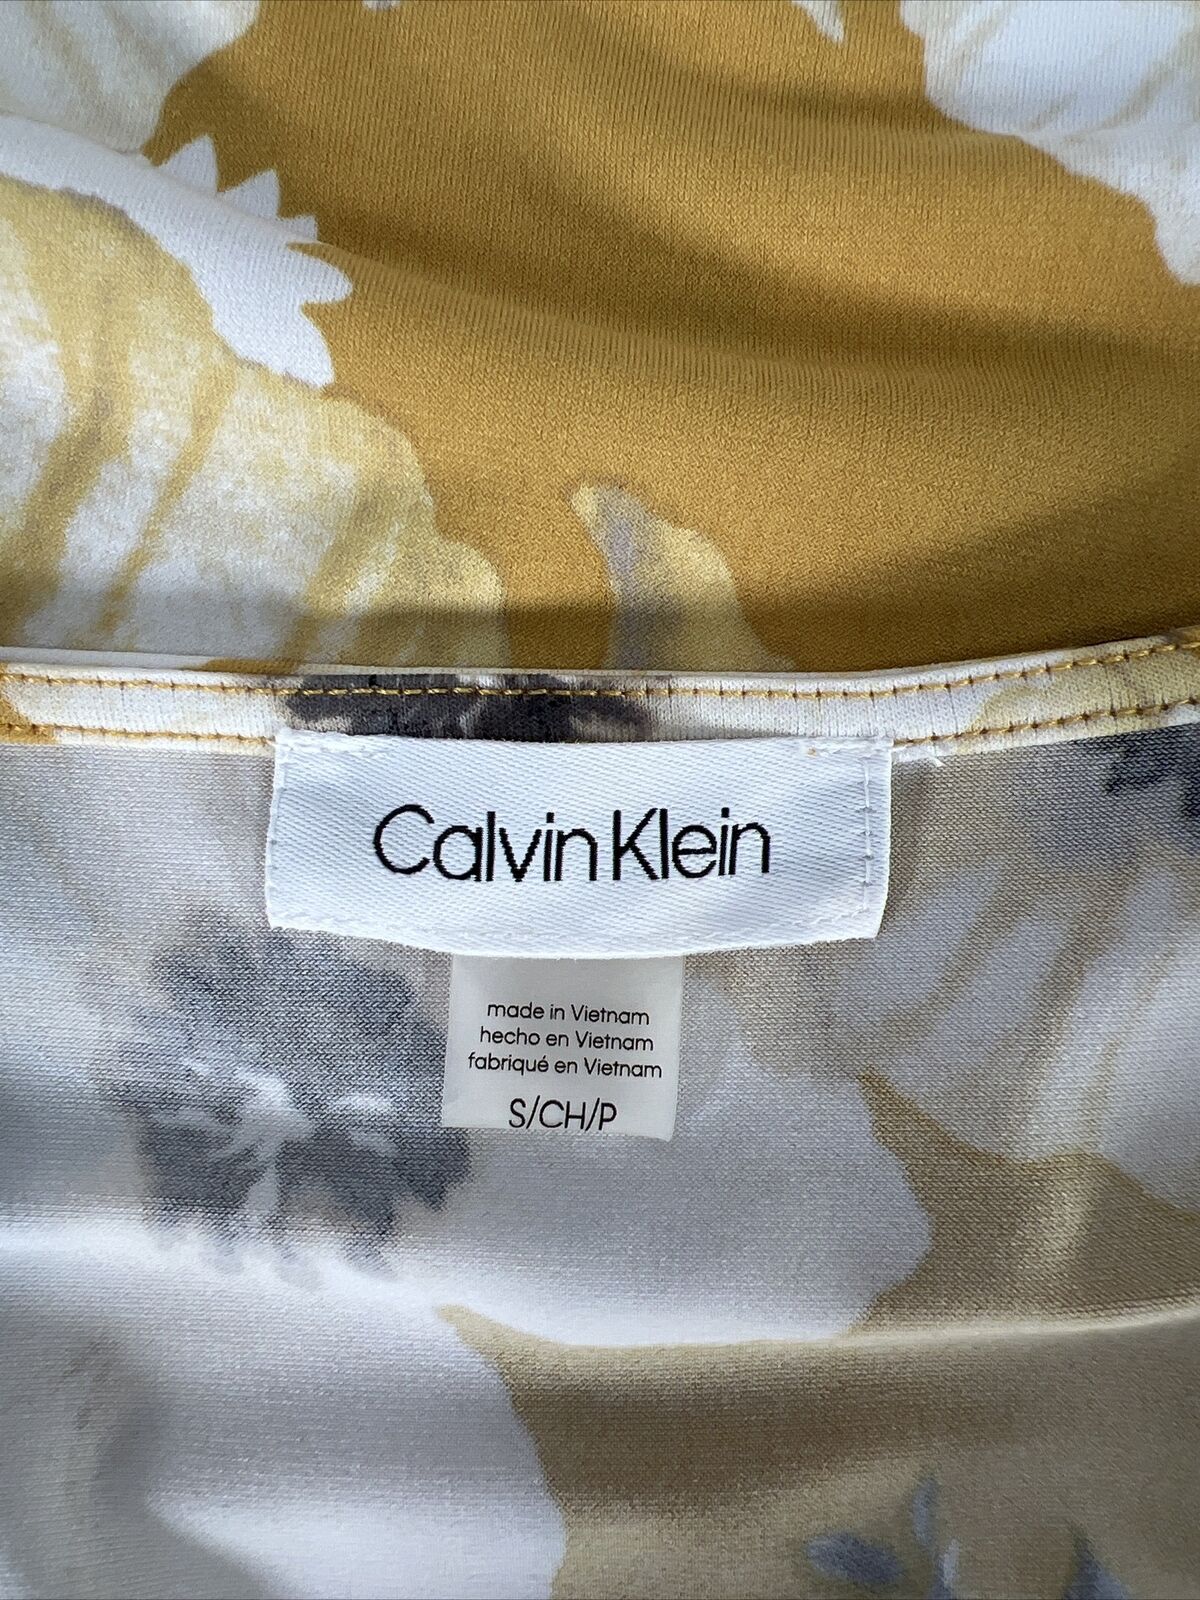 Calvin Klein Women's Yellow Floral Short Sleeve Top - S